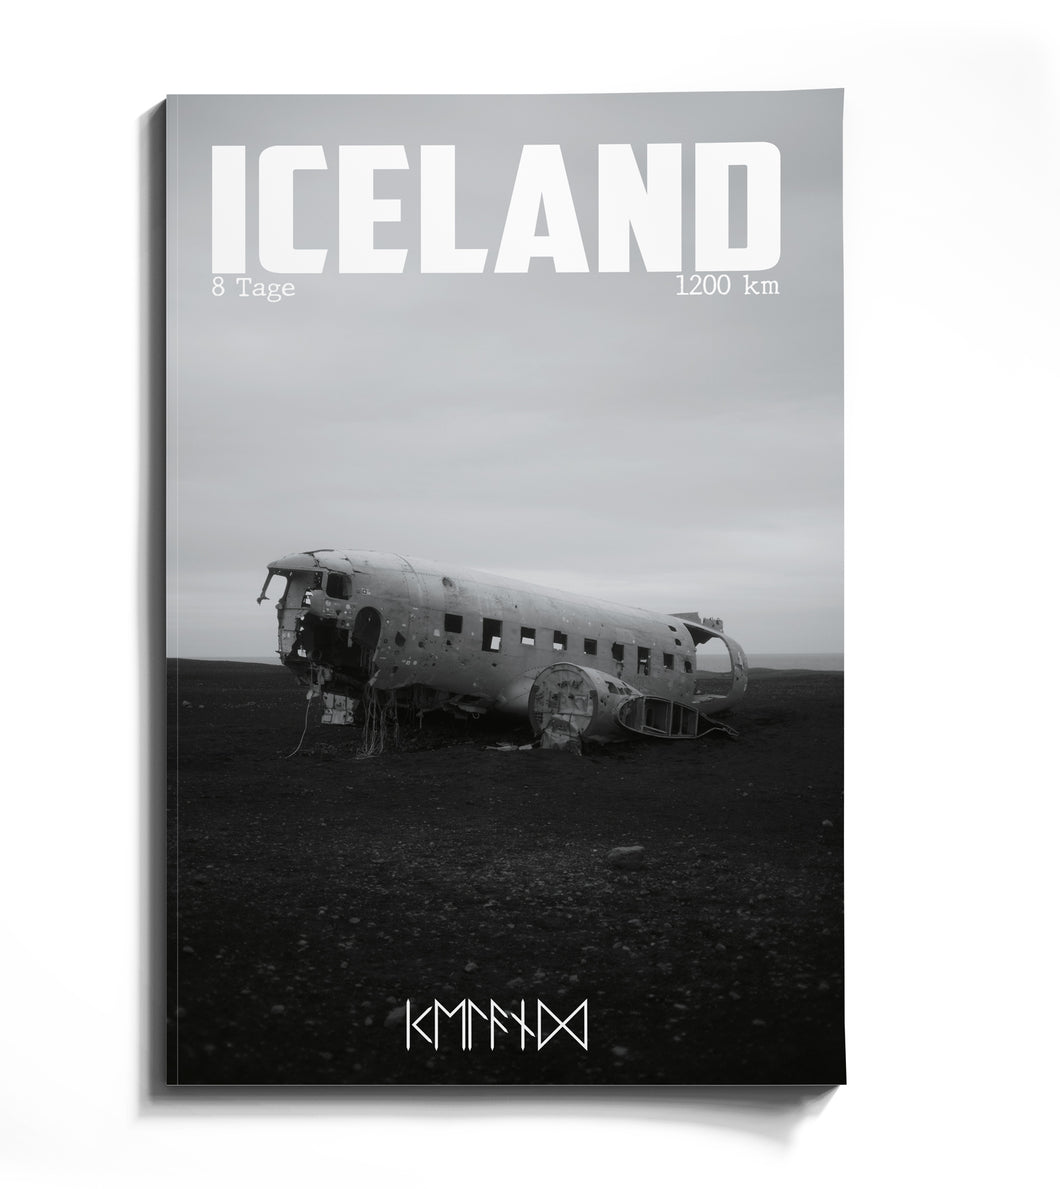 ICELAND - SOFTCOVER BILDBAND by JOSHUA OBERHAUS